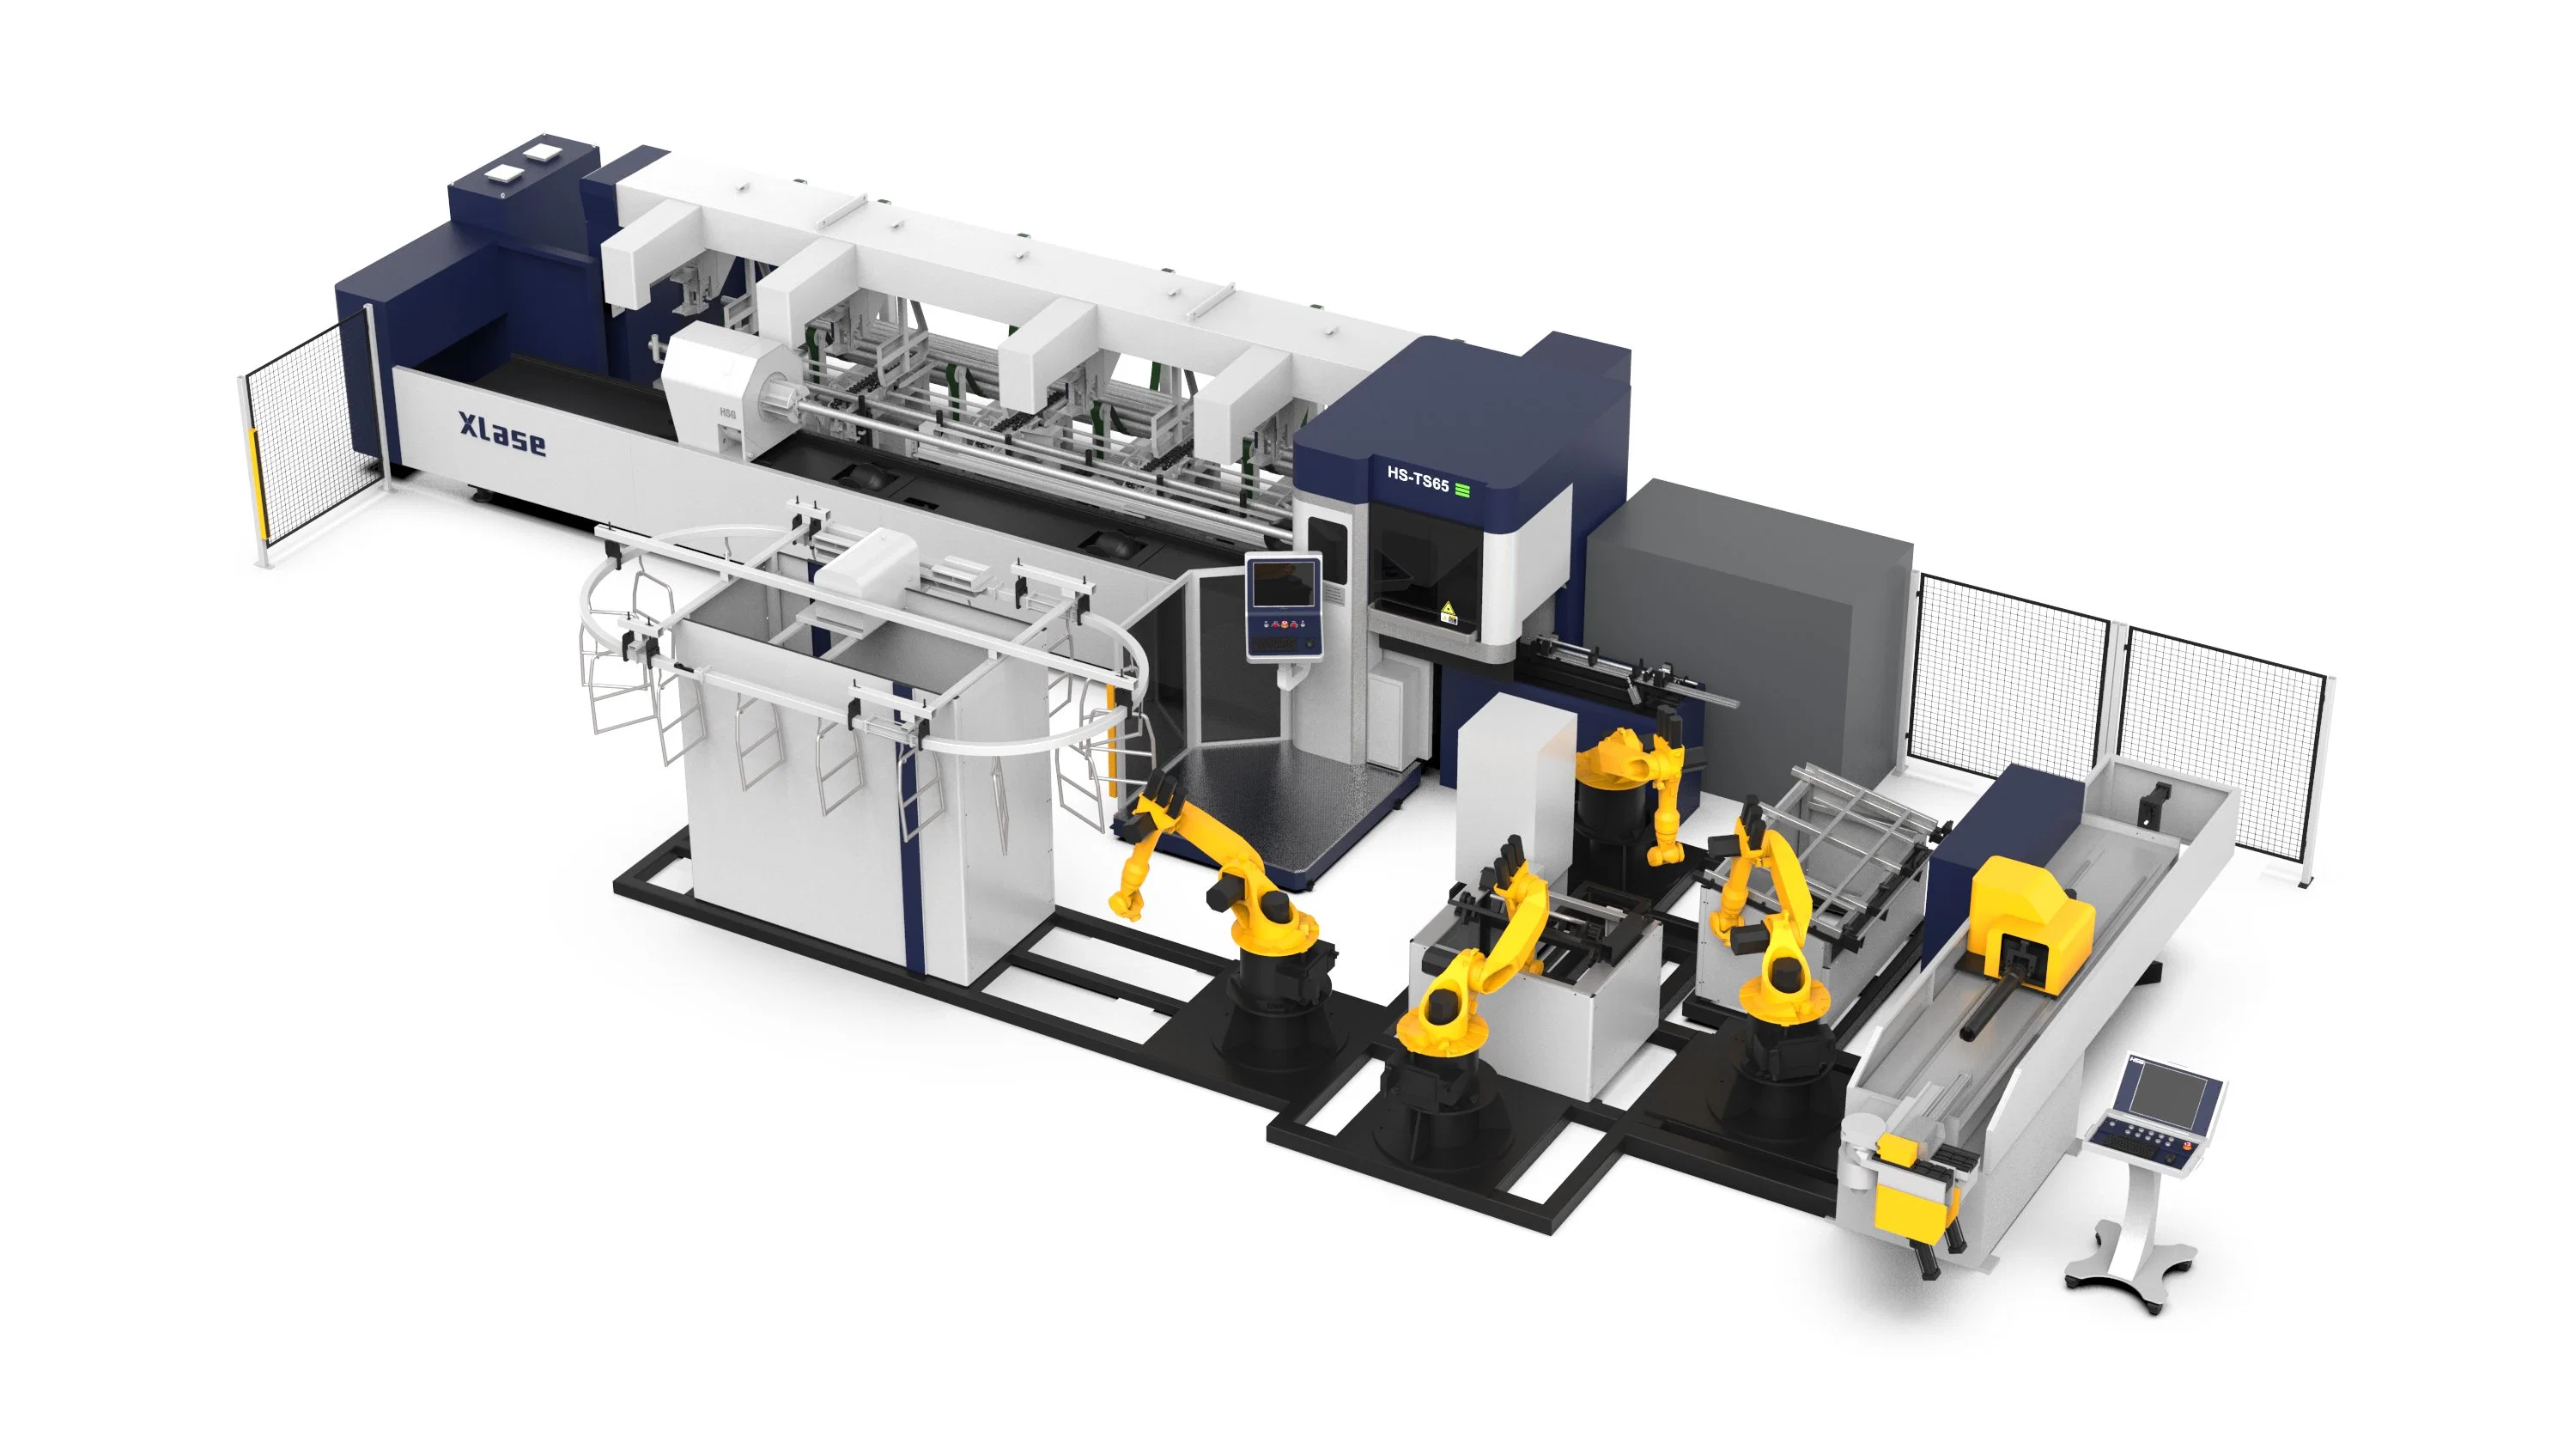 Hsg Laser Digital Chucks Tube Laser Cutting Machine 1500-4000W Ipg/Raycus Power Source